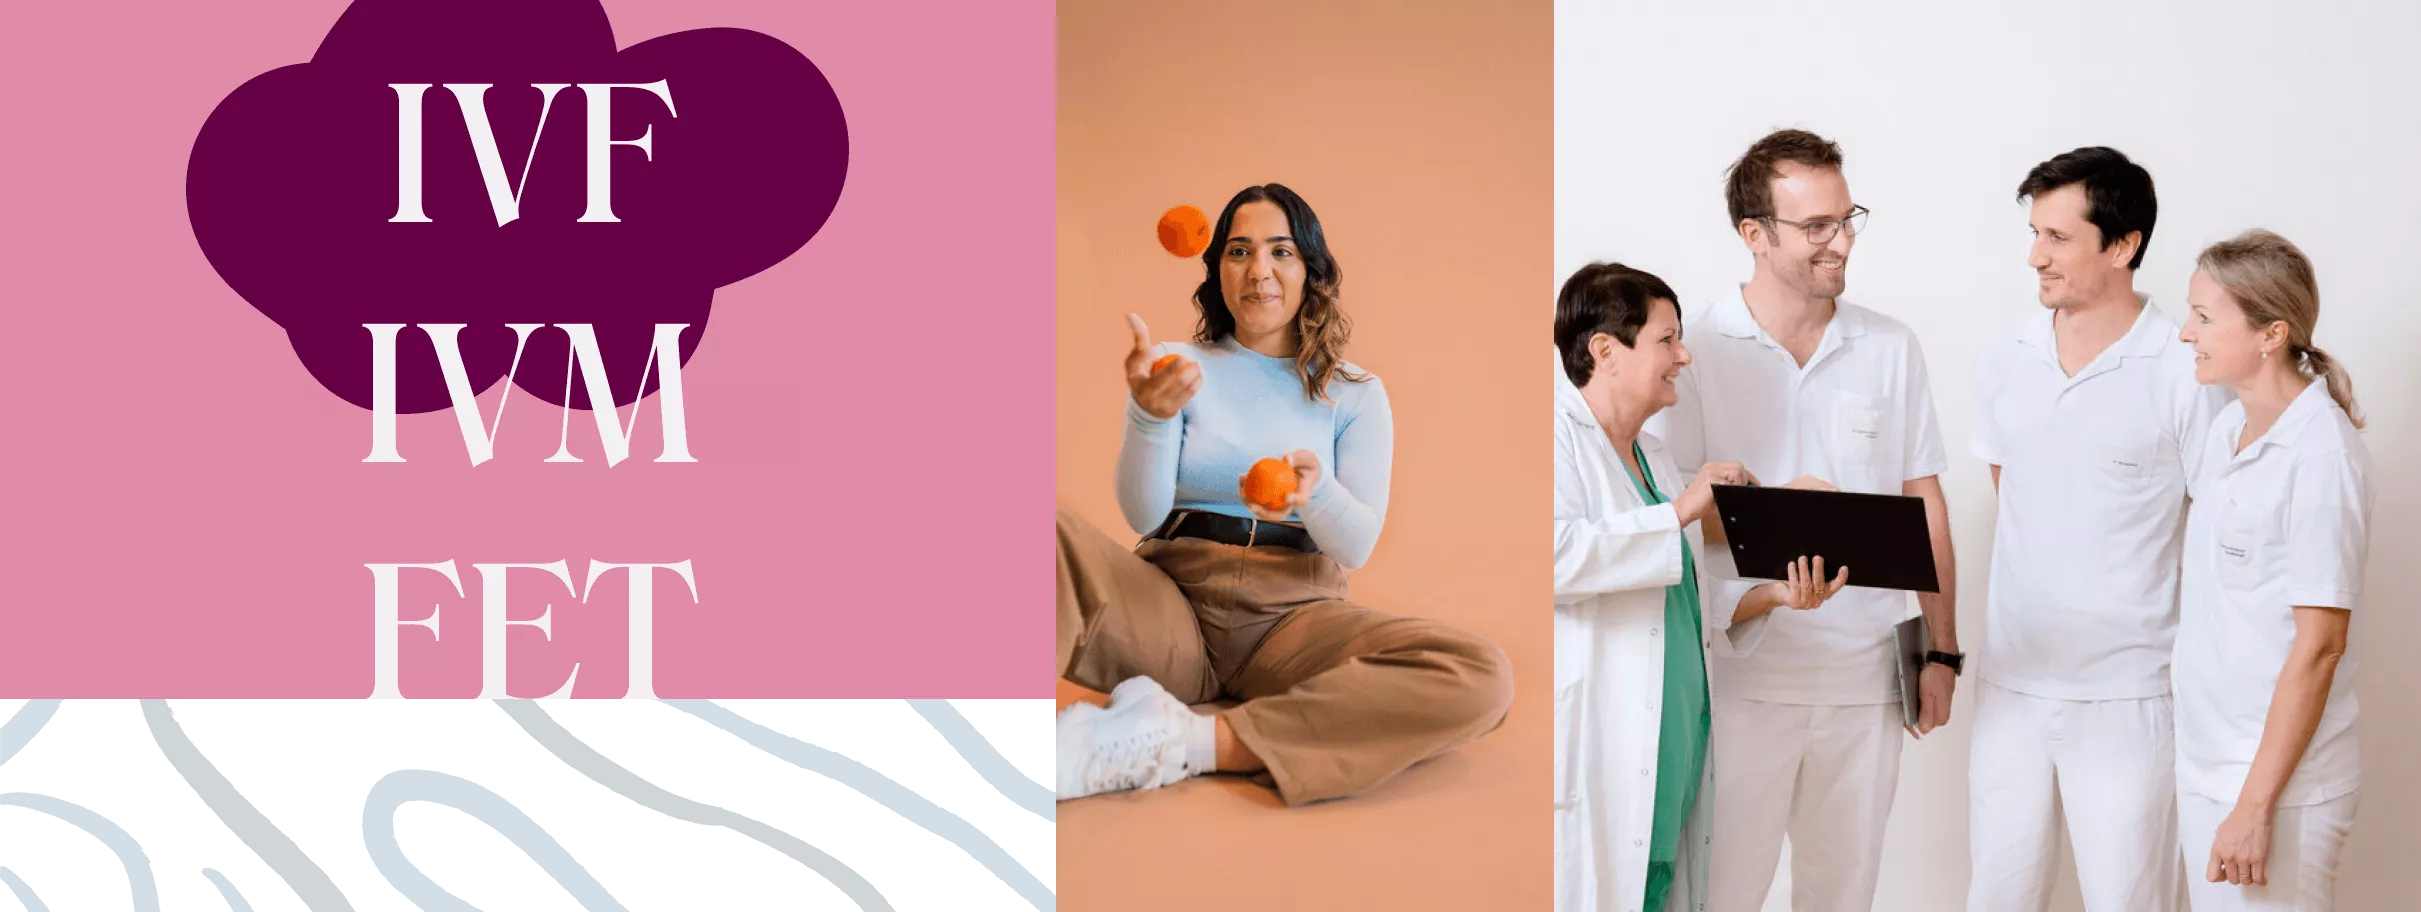 IVF treatments, woman juggling oranges, team of doctors